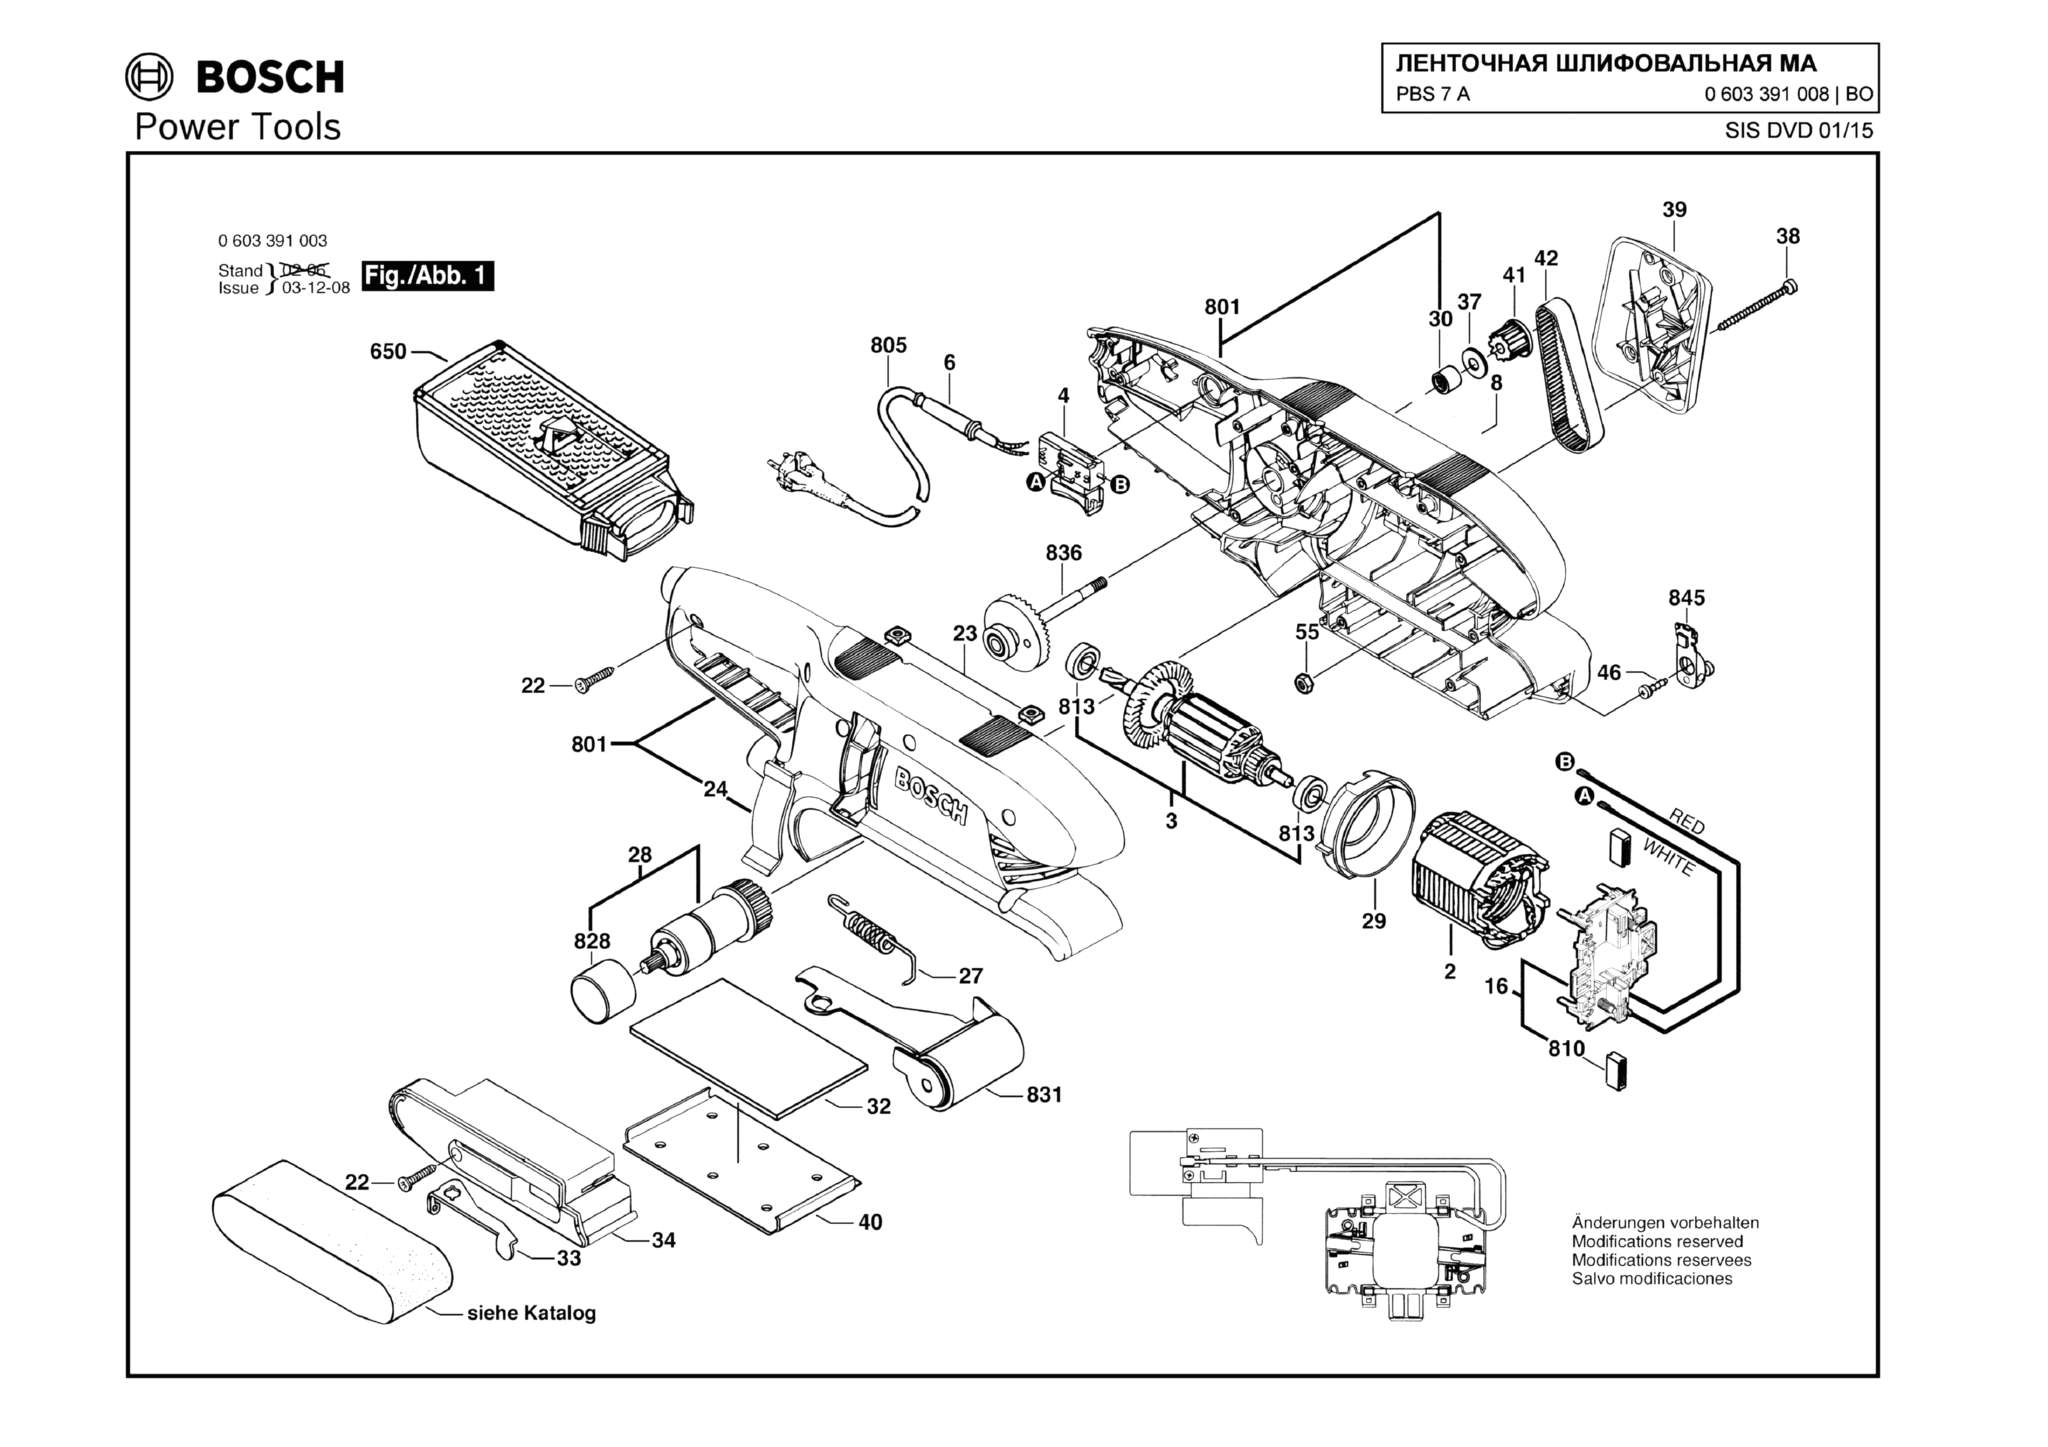 Запчасти, схема и деталировка Bosch PBS 7 A (ТИП 0603391008)